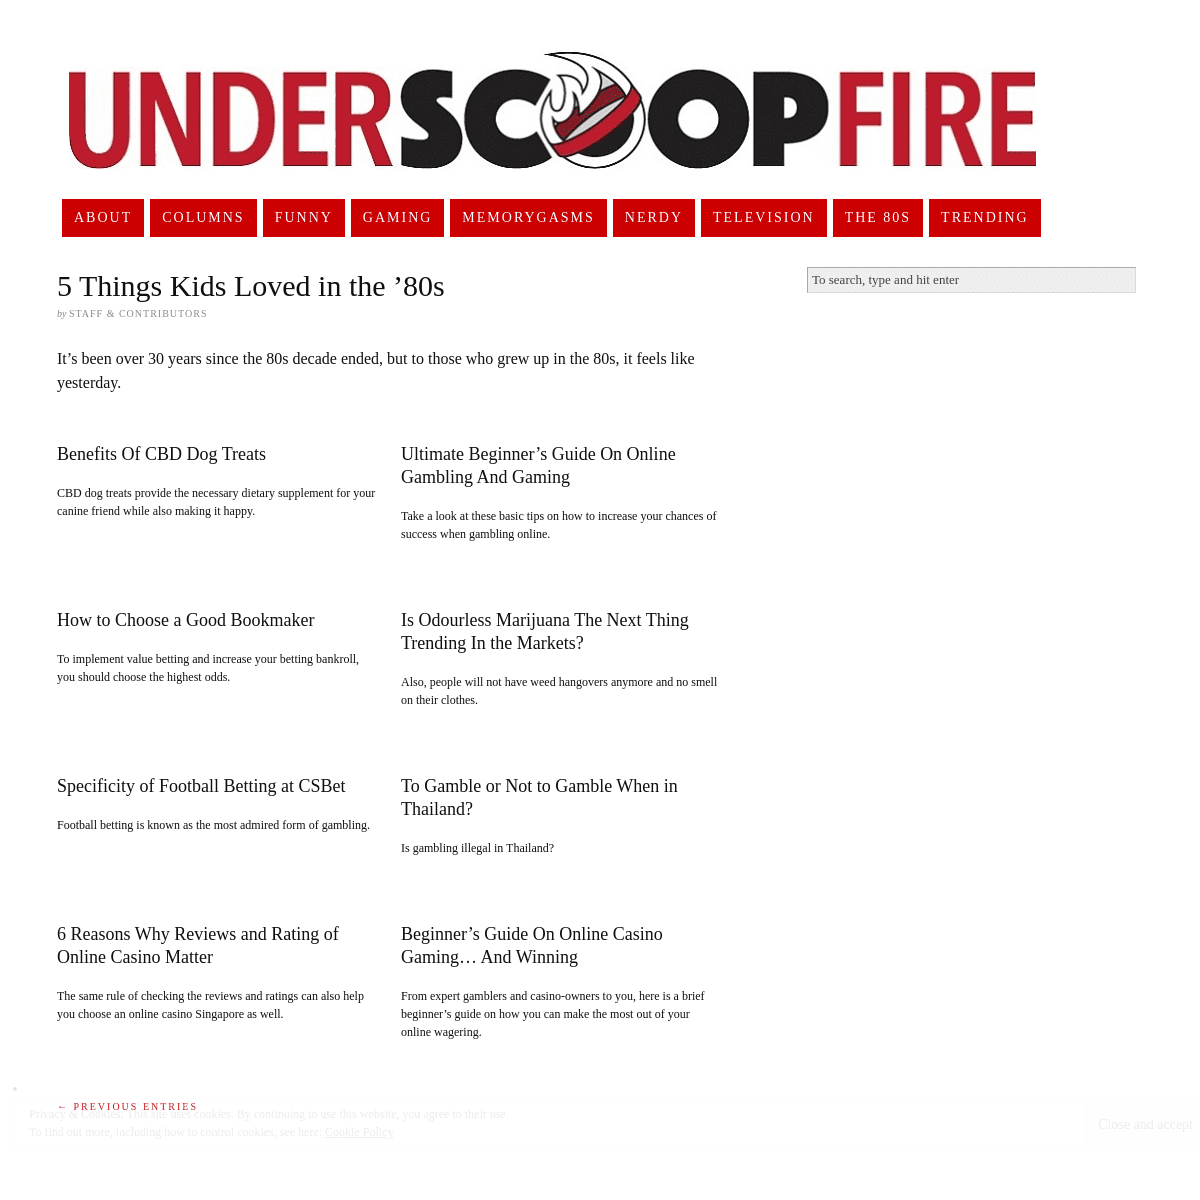 A complete backup of https://underscoopfire.com